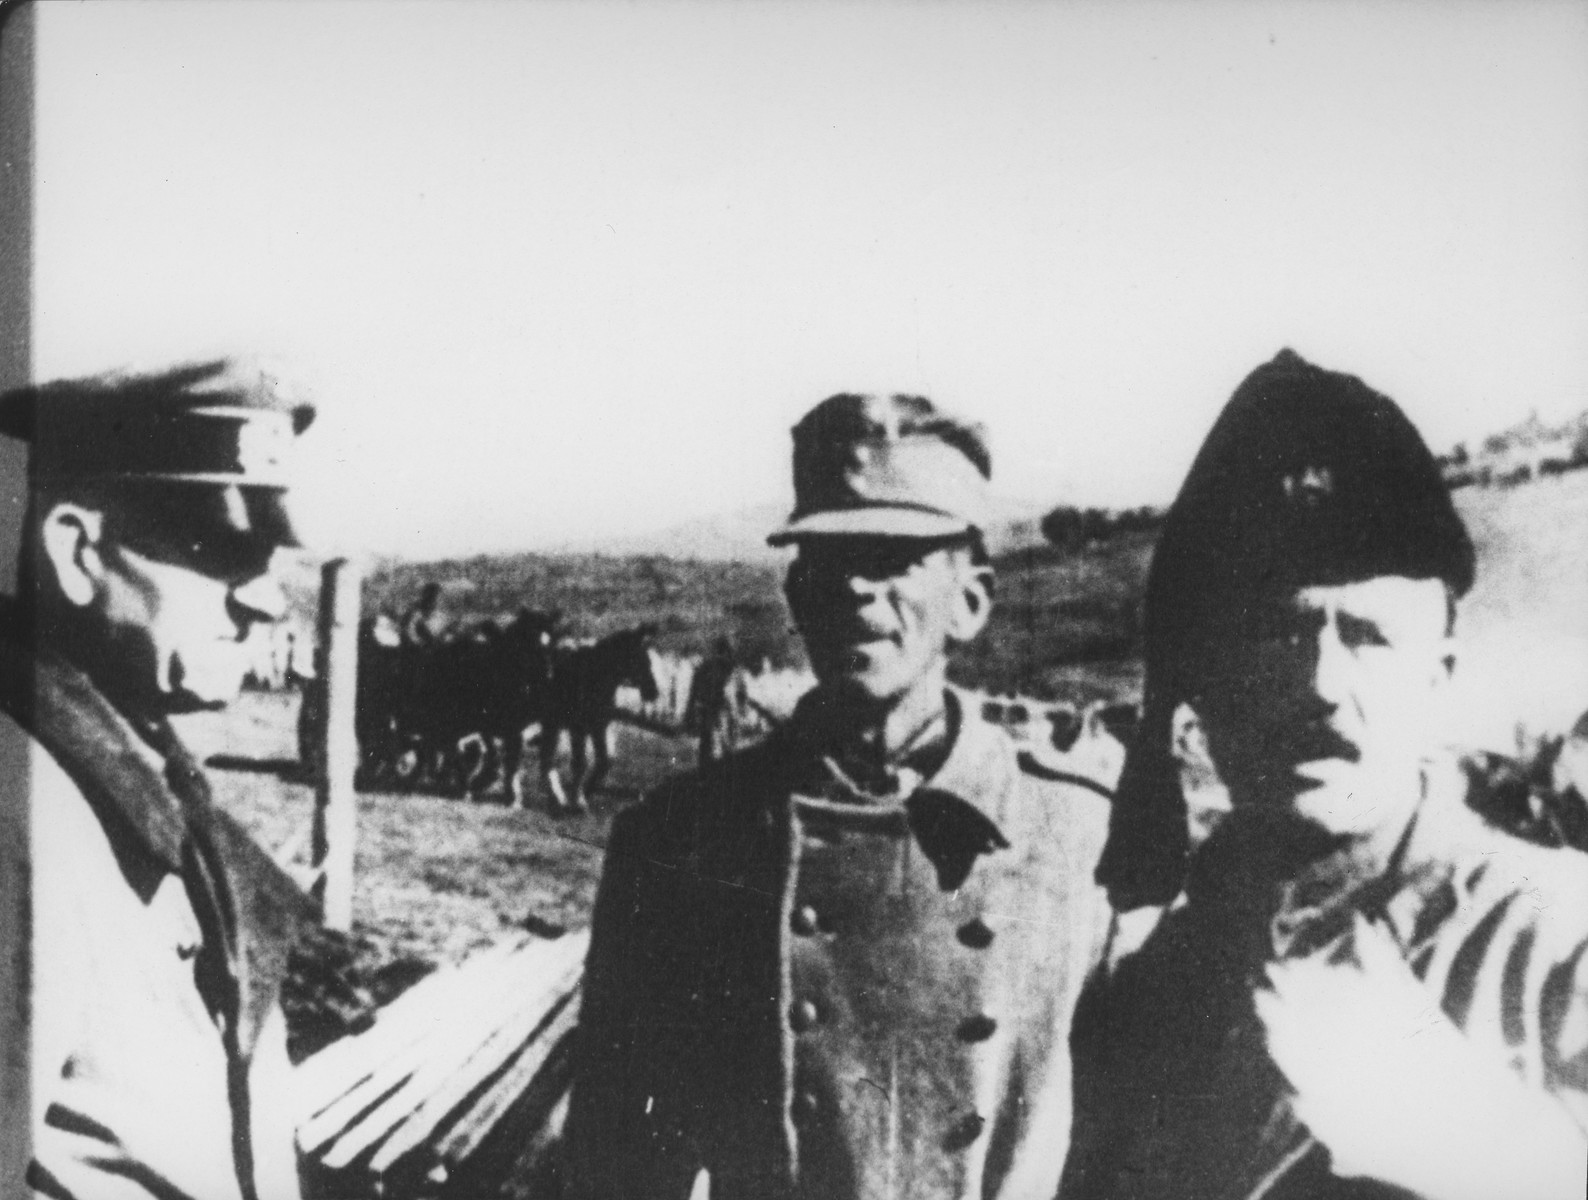 German General Major Friedrich Stahl stands alongside an Ustasa officer and Chetnik Commander Rade Radic in central Bosnia.